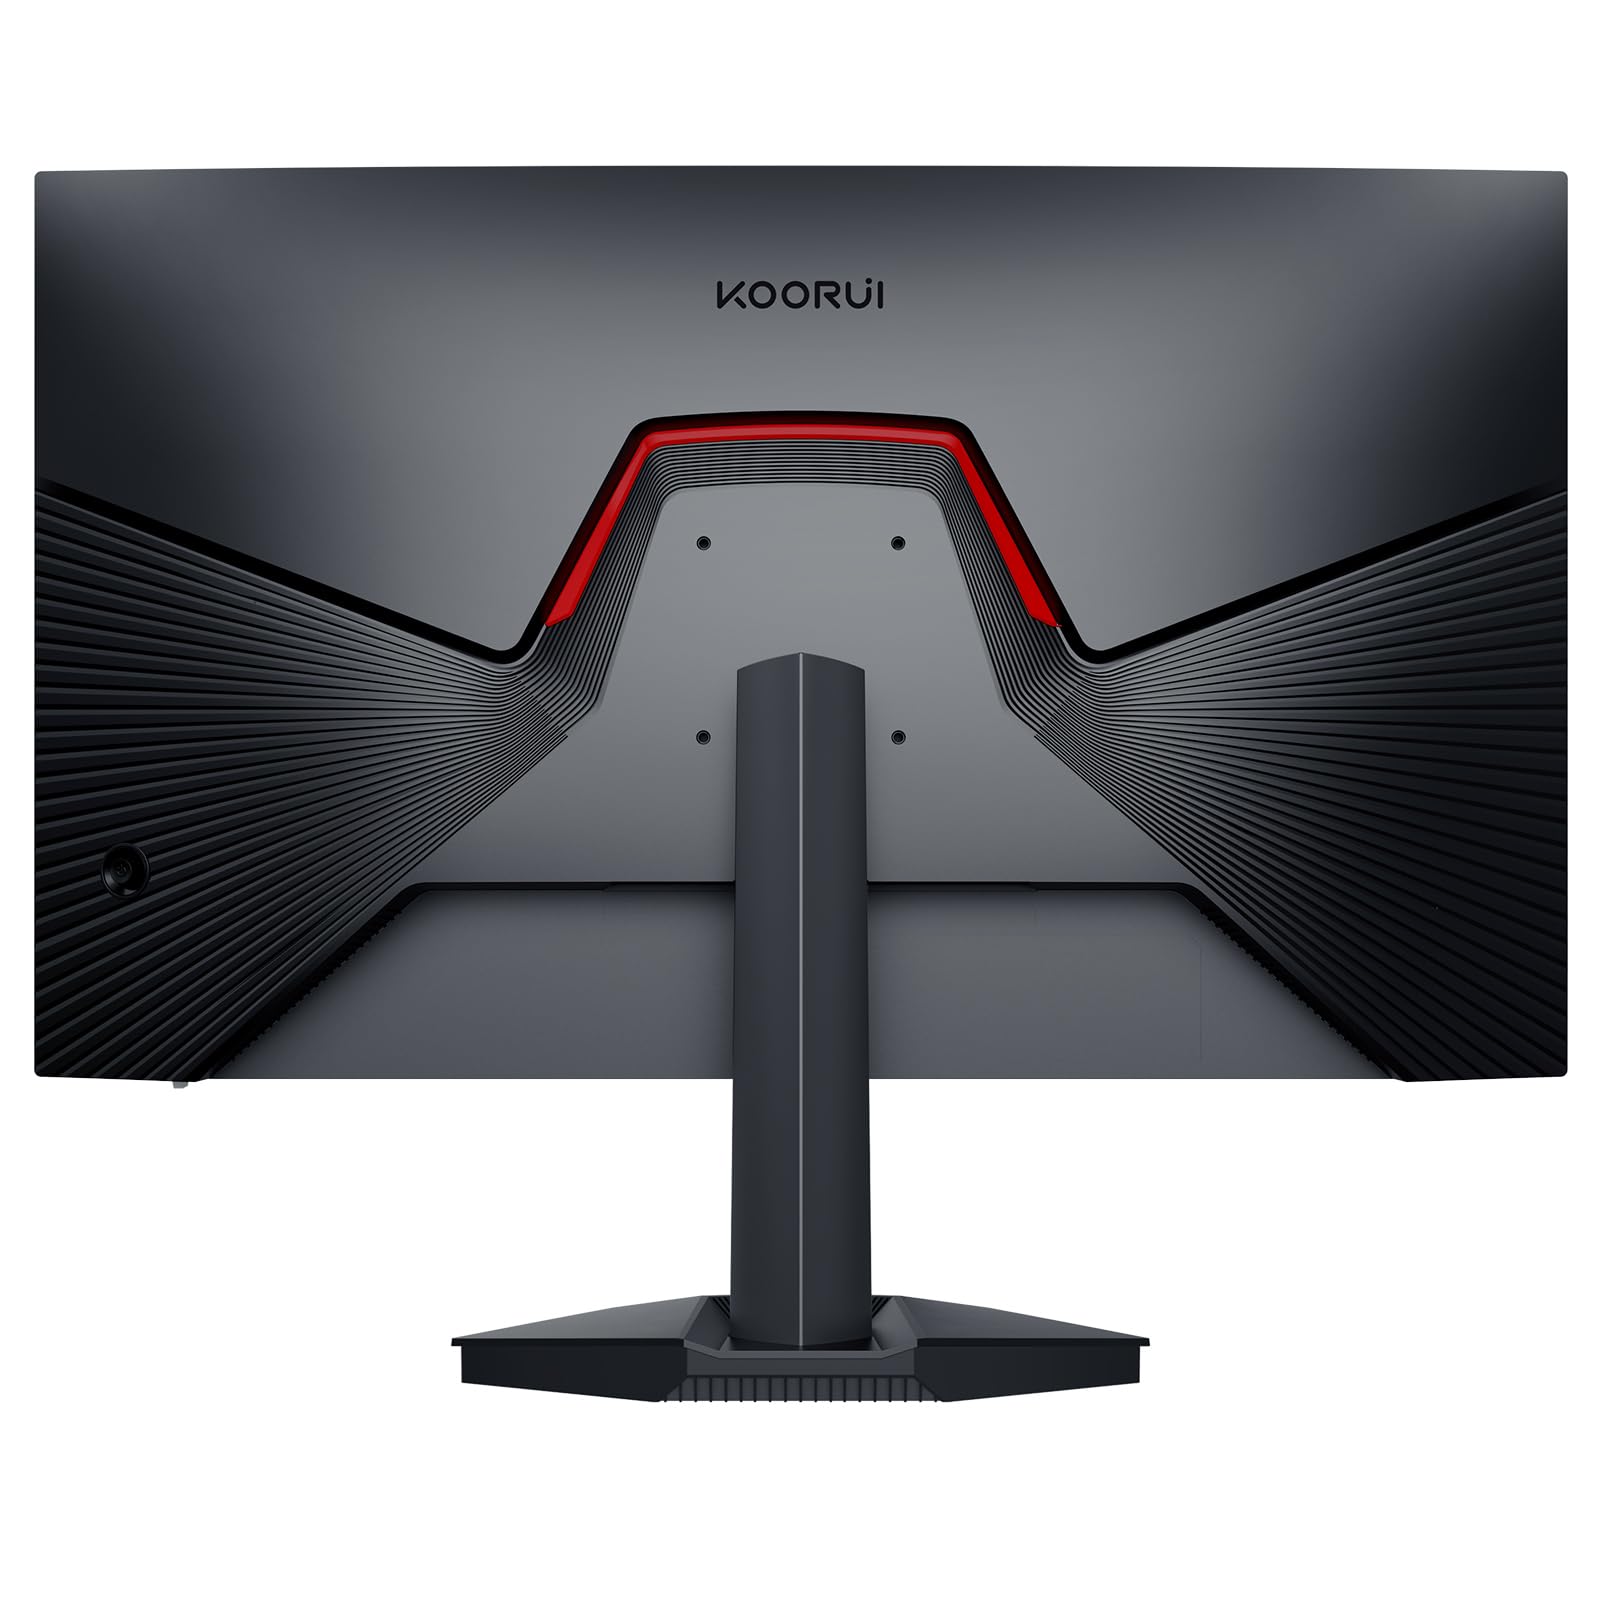 KOORUI 27 Inch Gaming Monitor 165hz, 1ms, Full HD DCI-P3 90% Color Gamut, Adaptive Sync Compatible, (1920 x 1080, HDMI, DisplayPort) Black